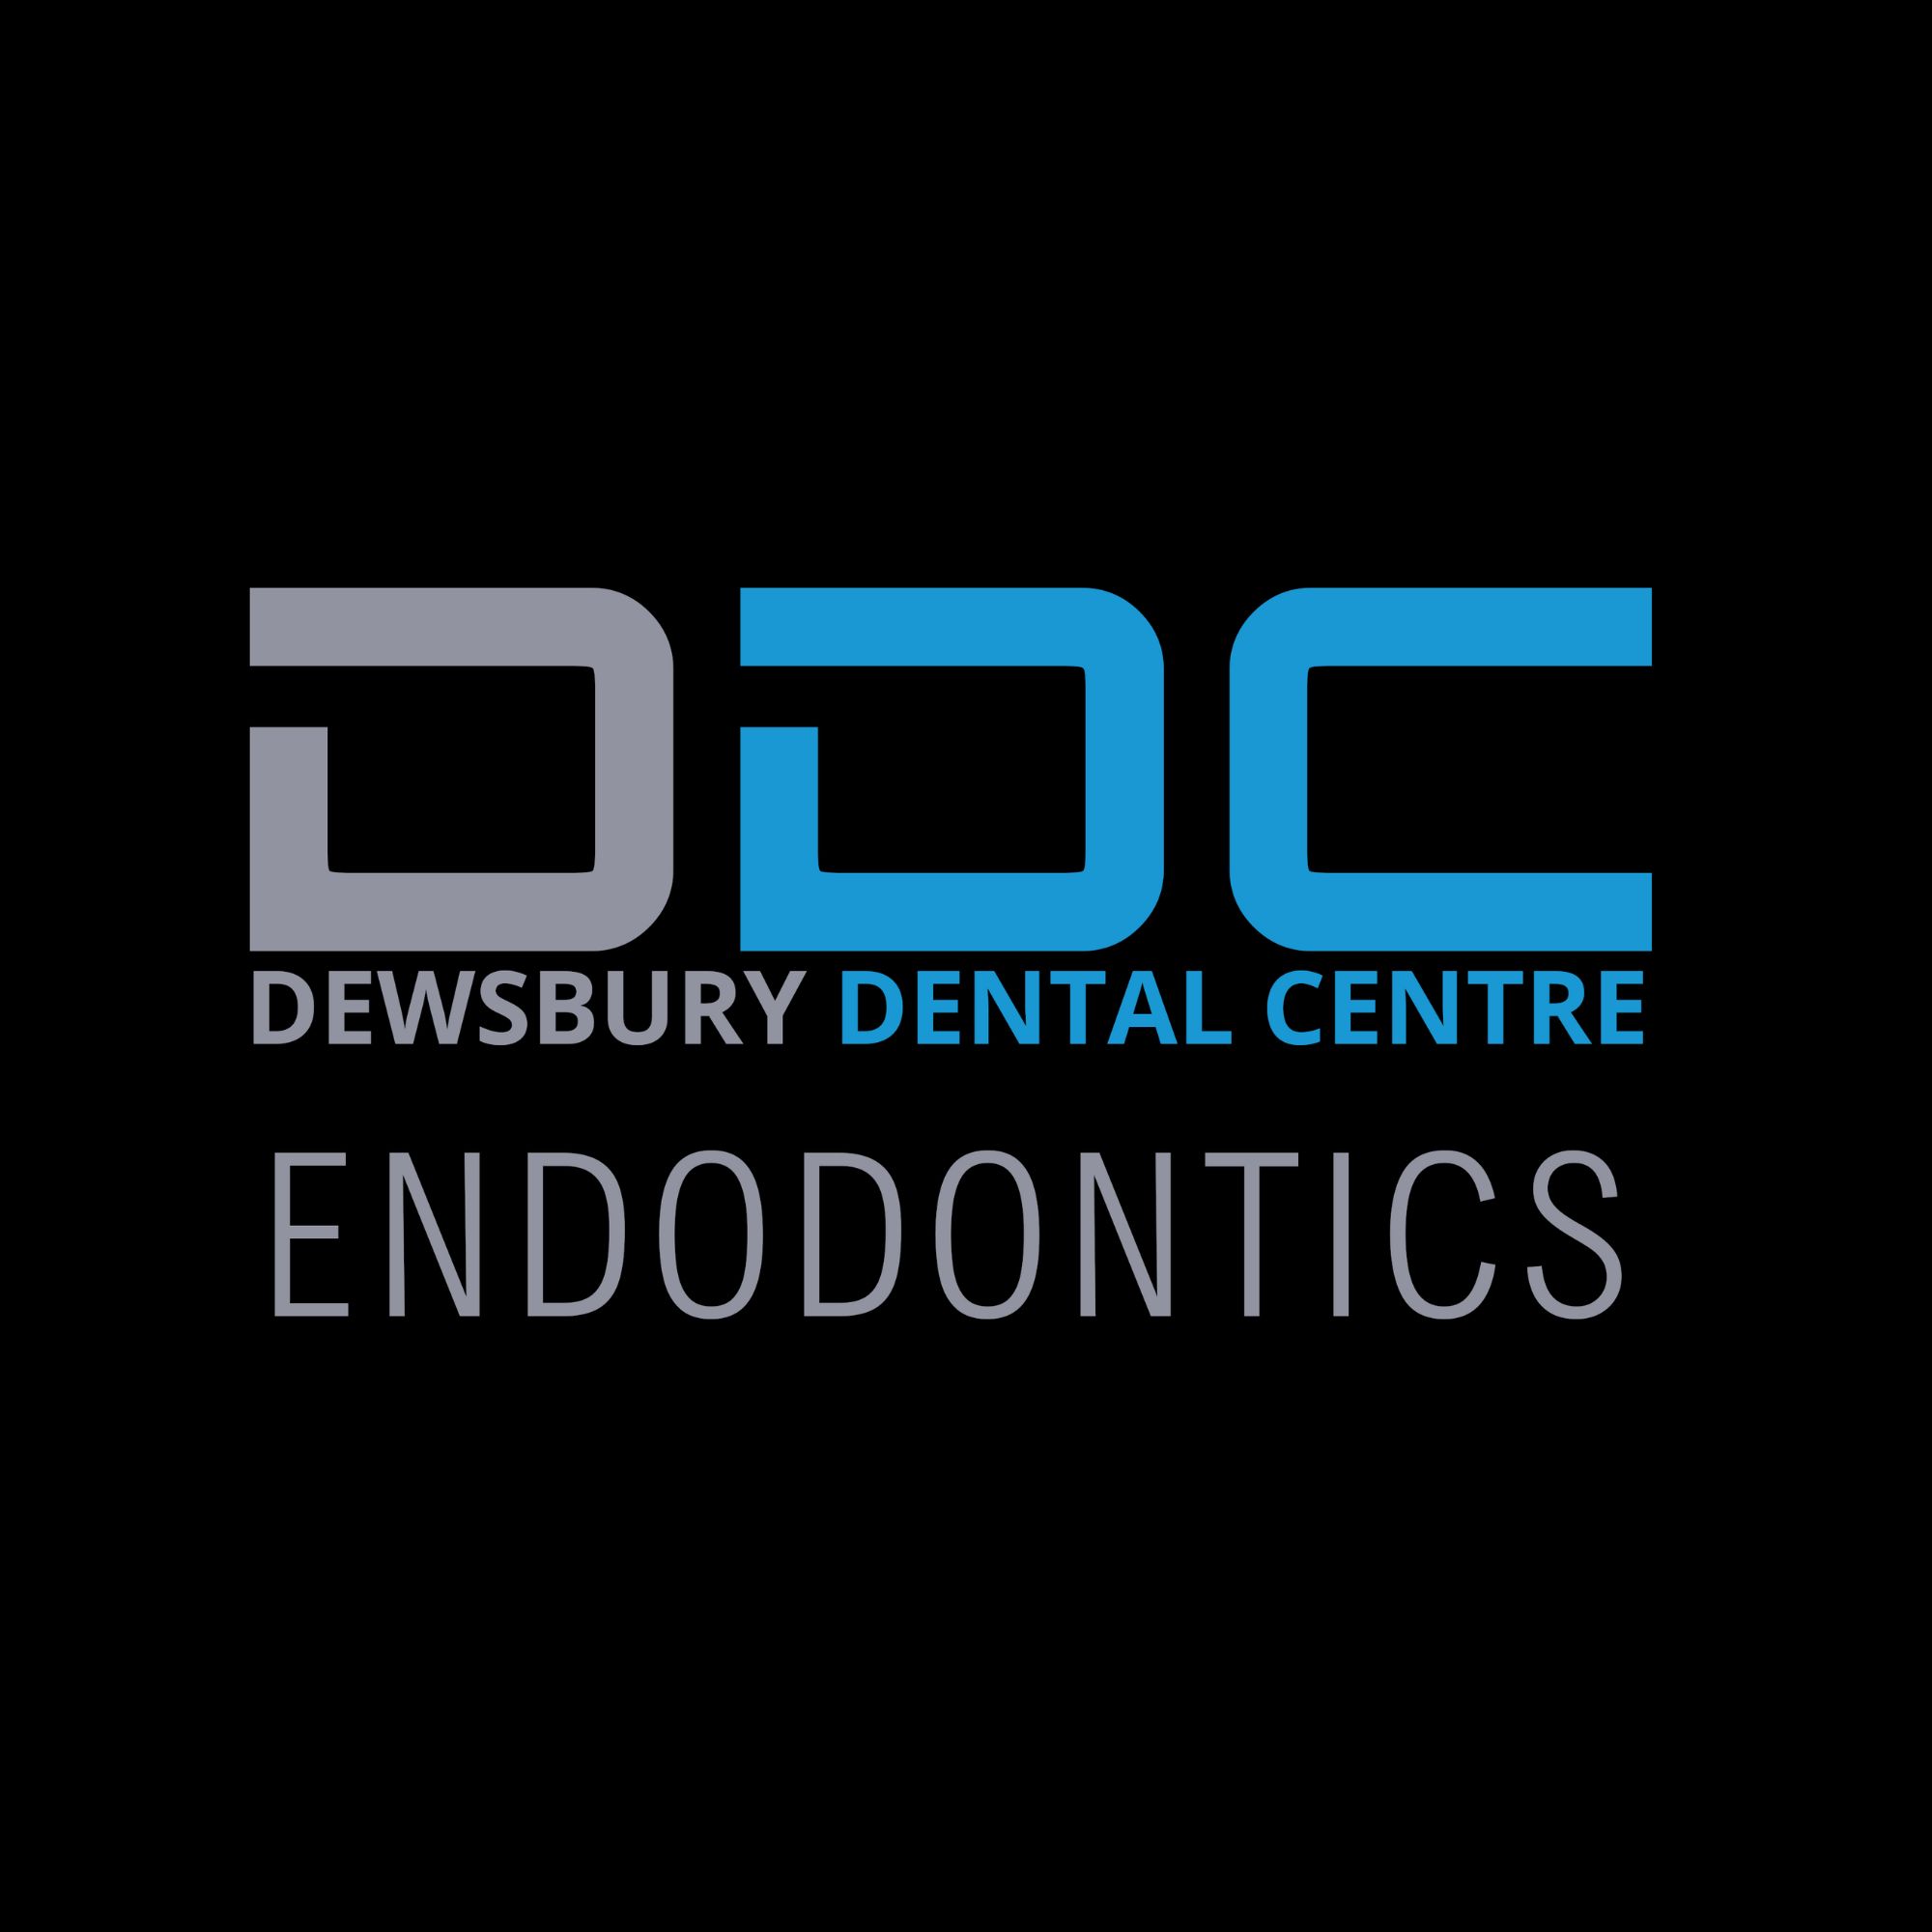 Endodontic Treatment (root canal referrals)